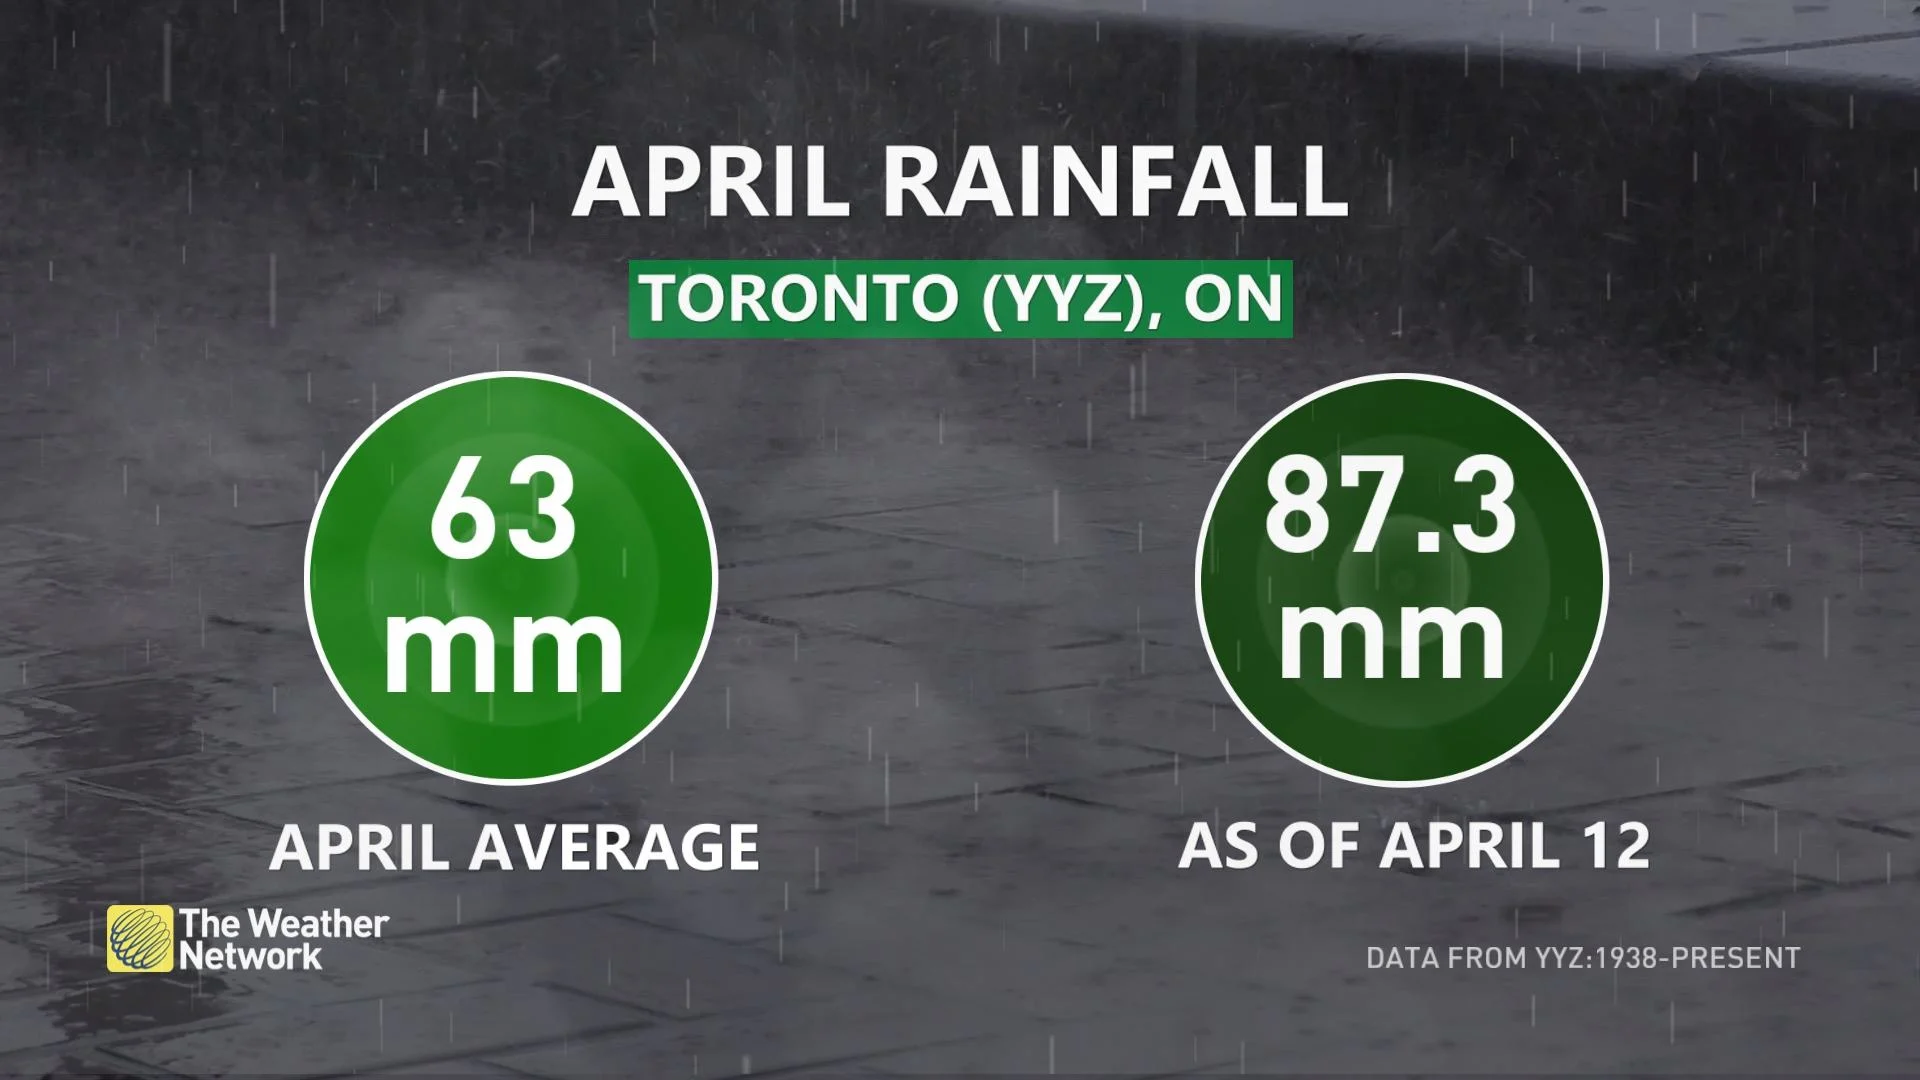 Average rainfall for Toronto in April